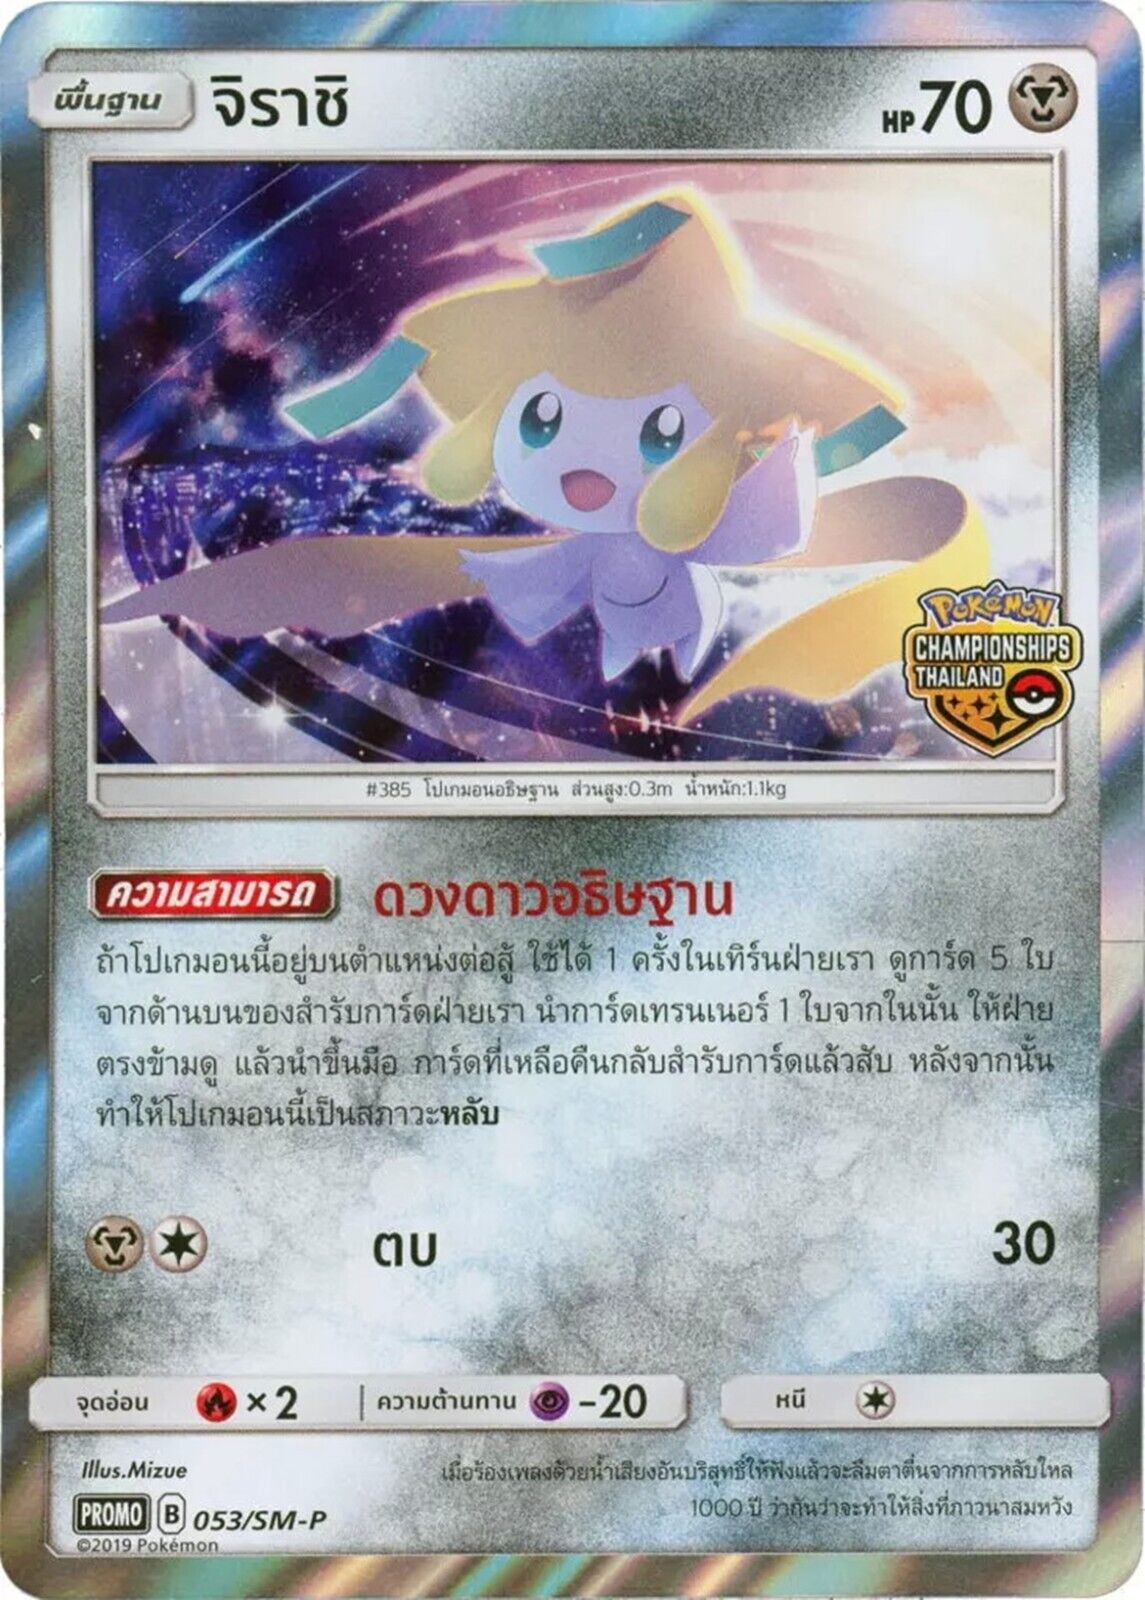 Pokemon Jirachi 053/SM-P Promo 2019 Thai Championship Prize Card Rare Pack